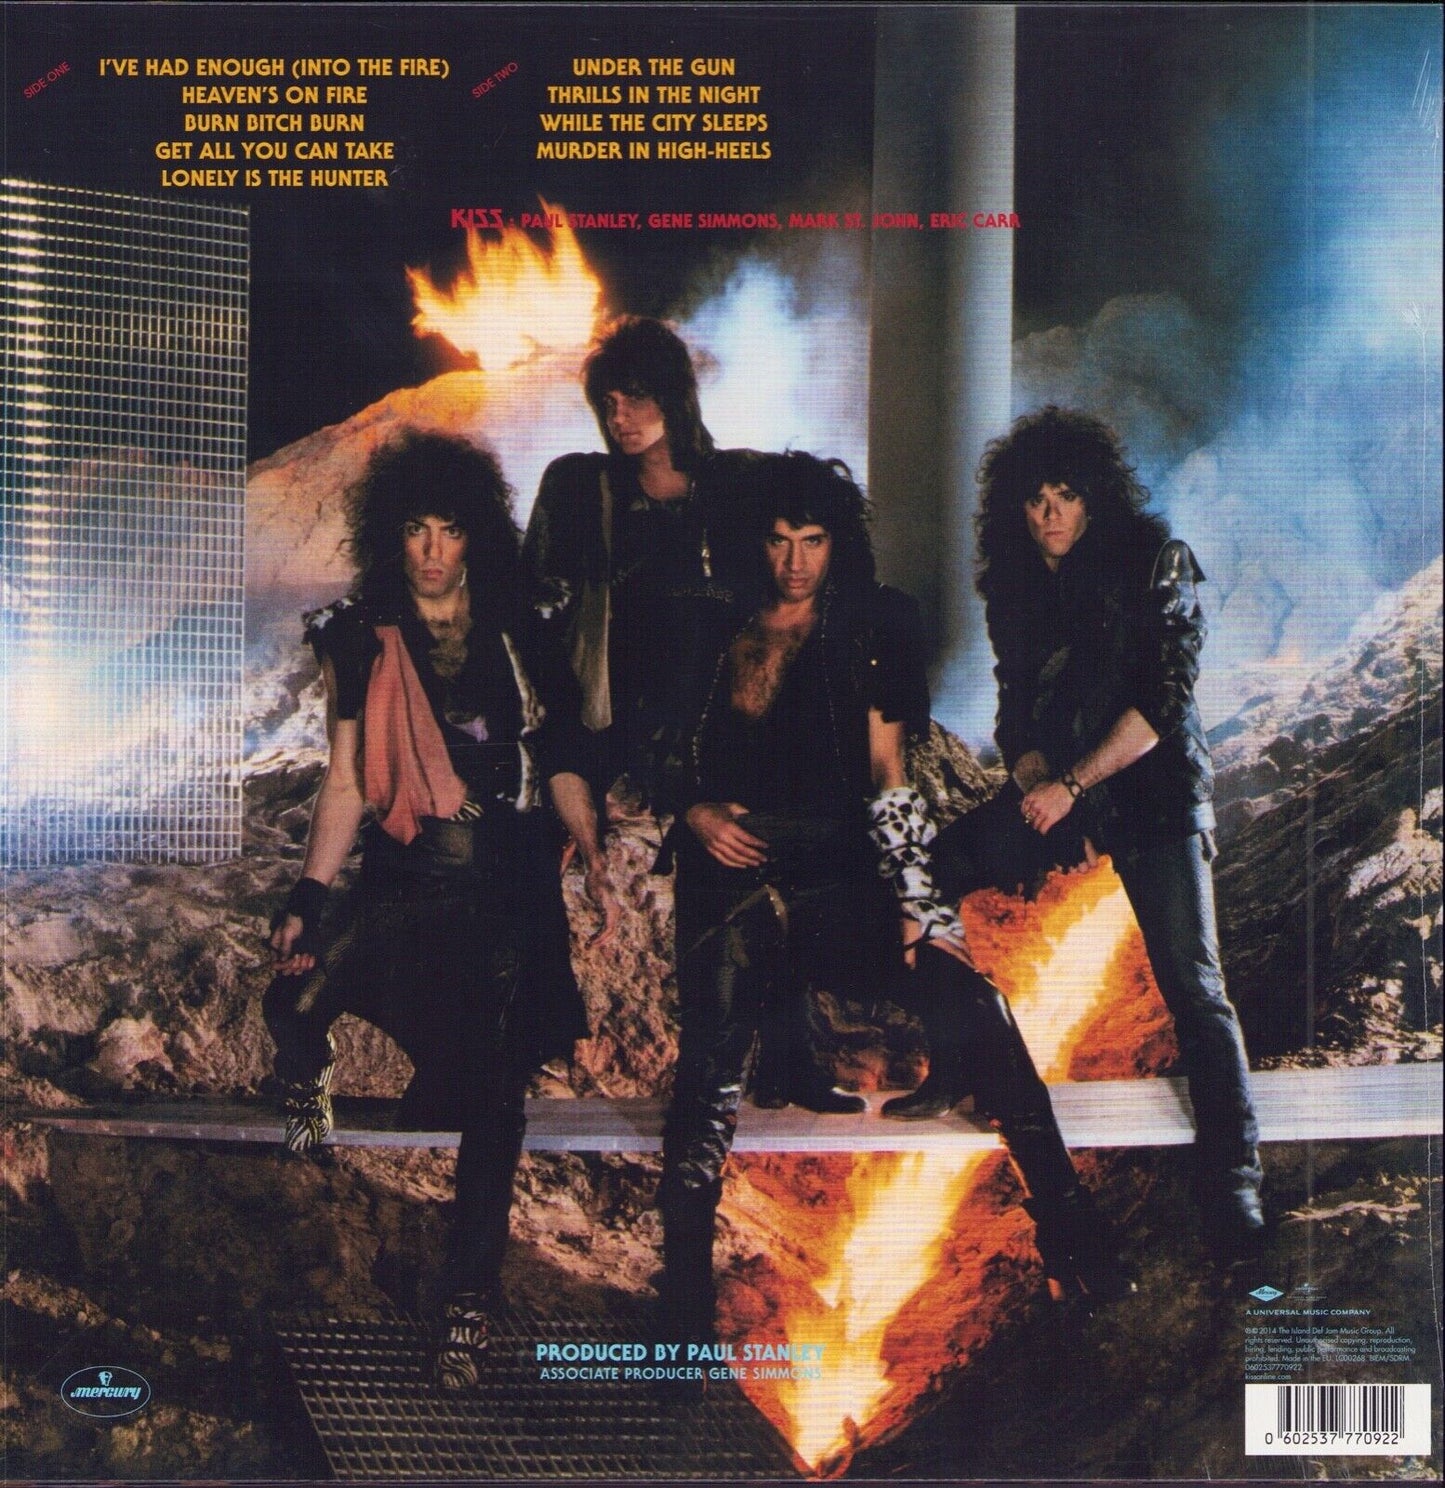 Kiss - Animalize Vinyl LP Limited Edition